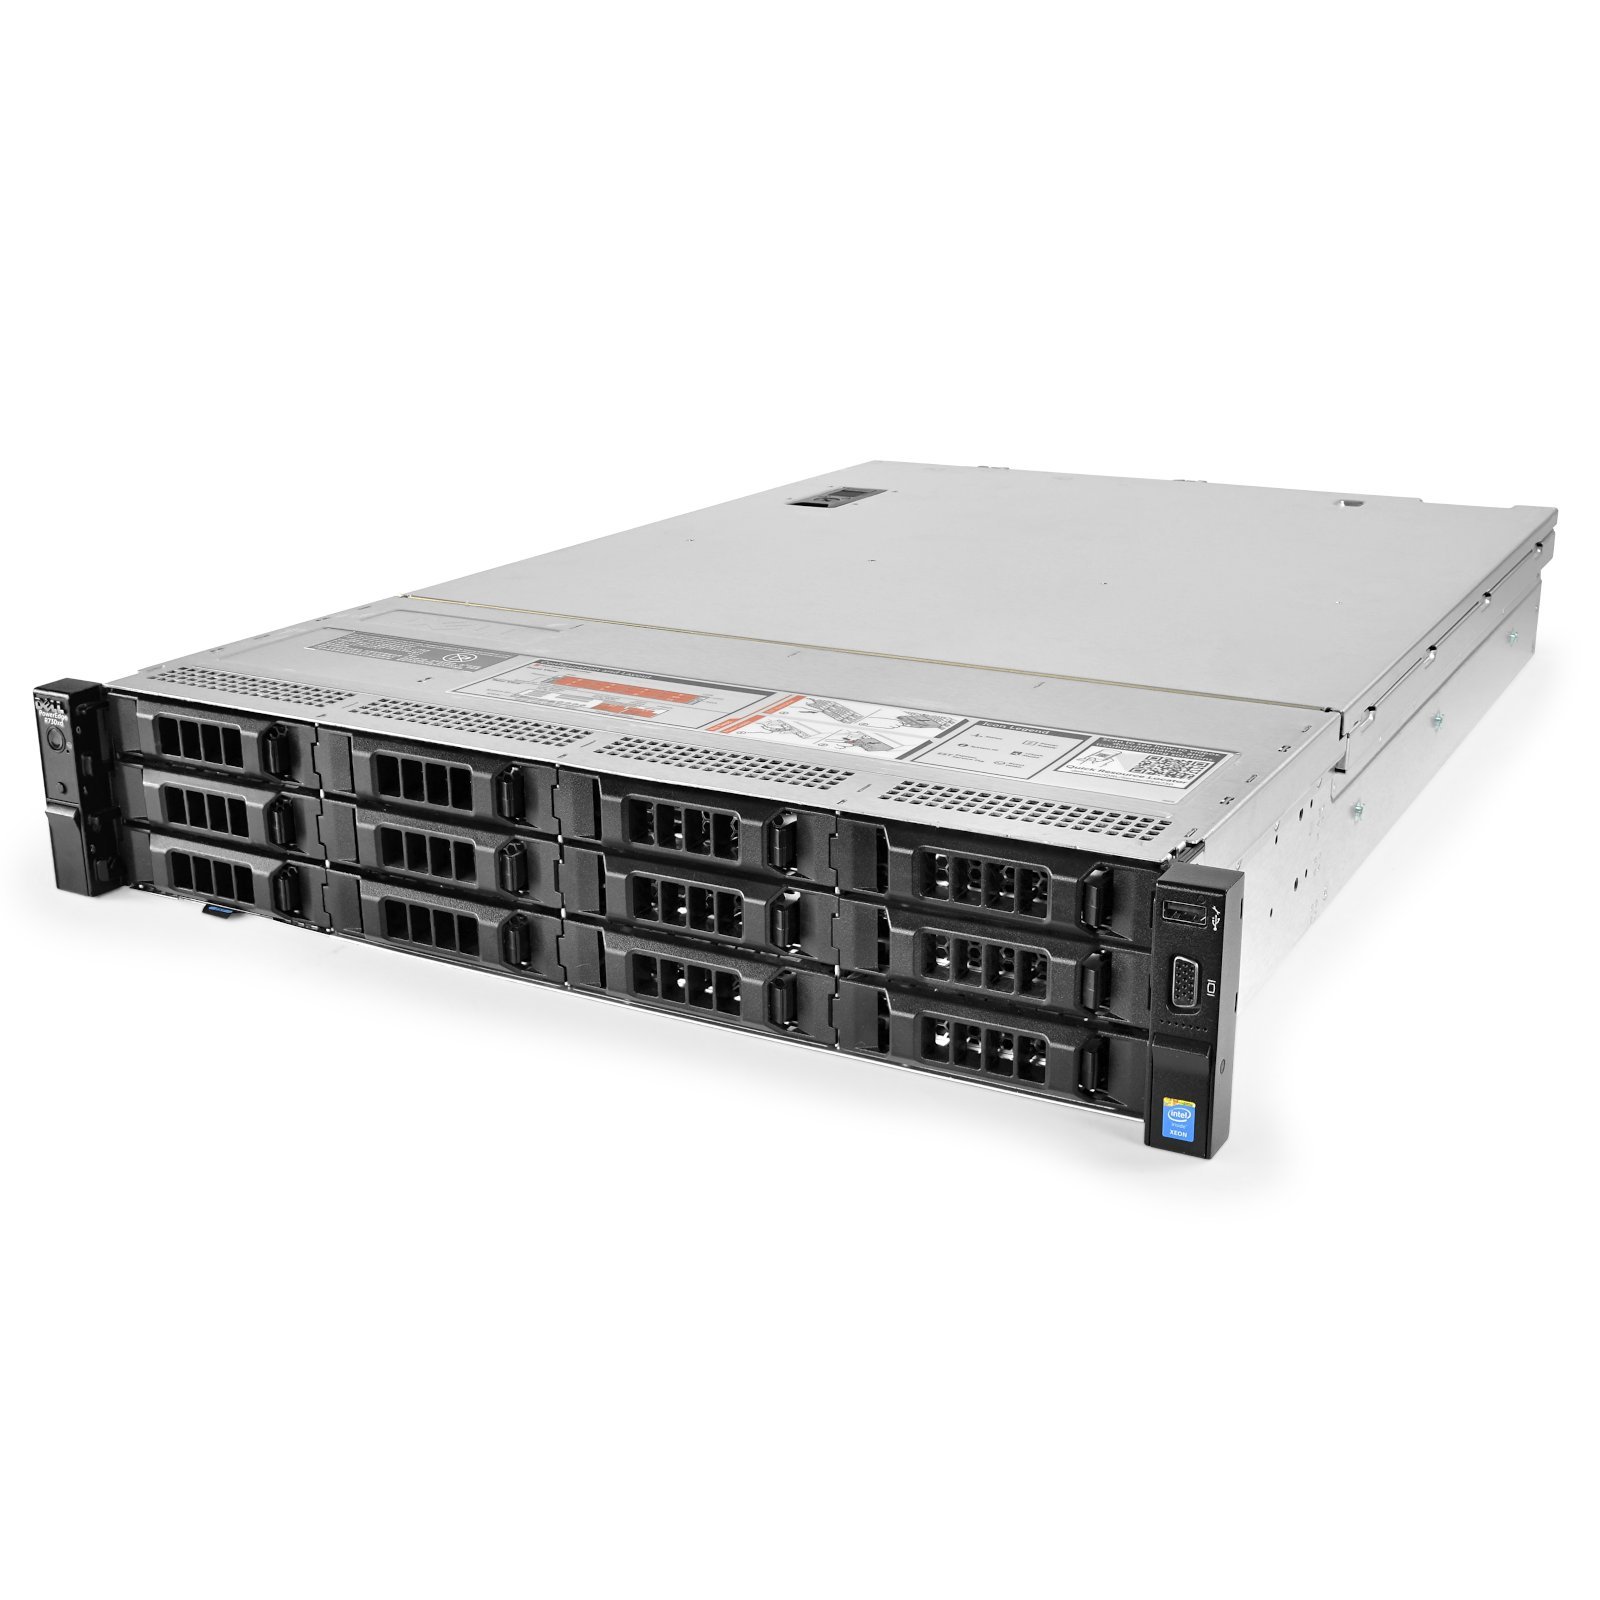 Подробное фото Сервер DELL PowerEdge R730XD 2x Xeon E5-2667v3 128Gb 2133P DDR4 12x noHDD 3.5" SAS RAID Perc H730 mini, 1024Mb, 2*PSU 750W